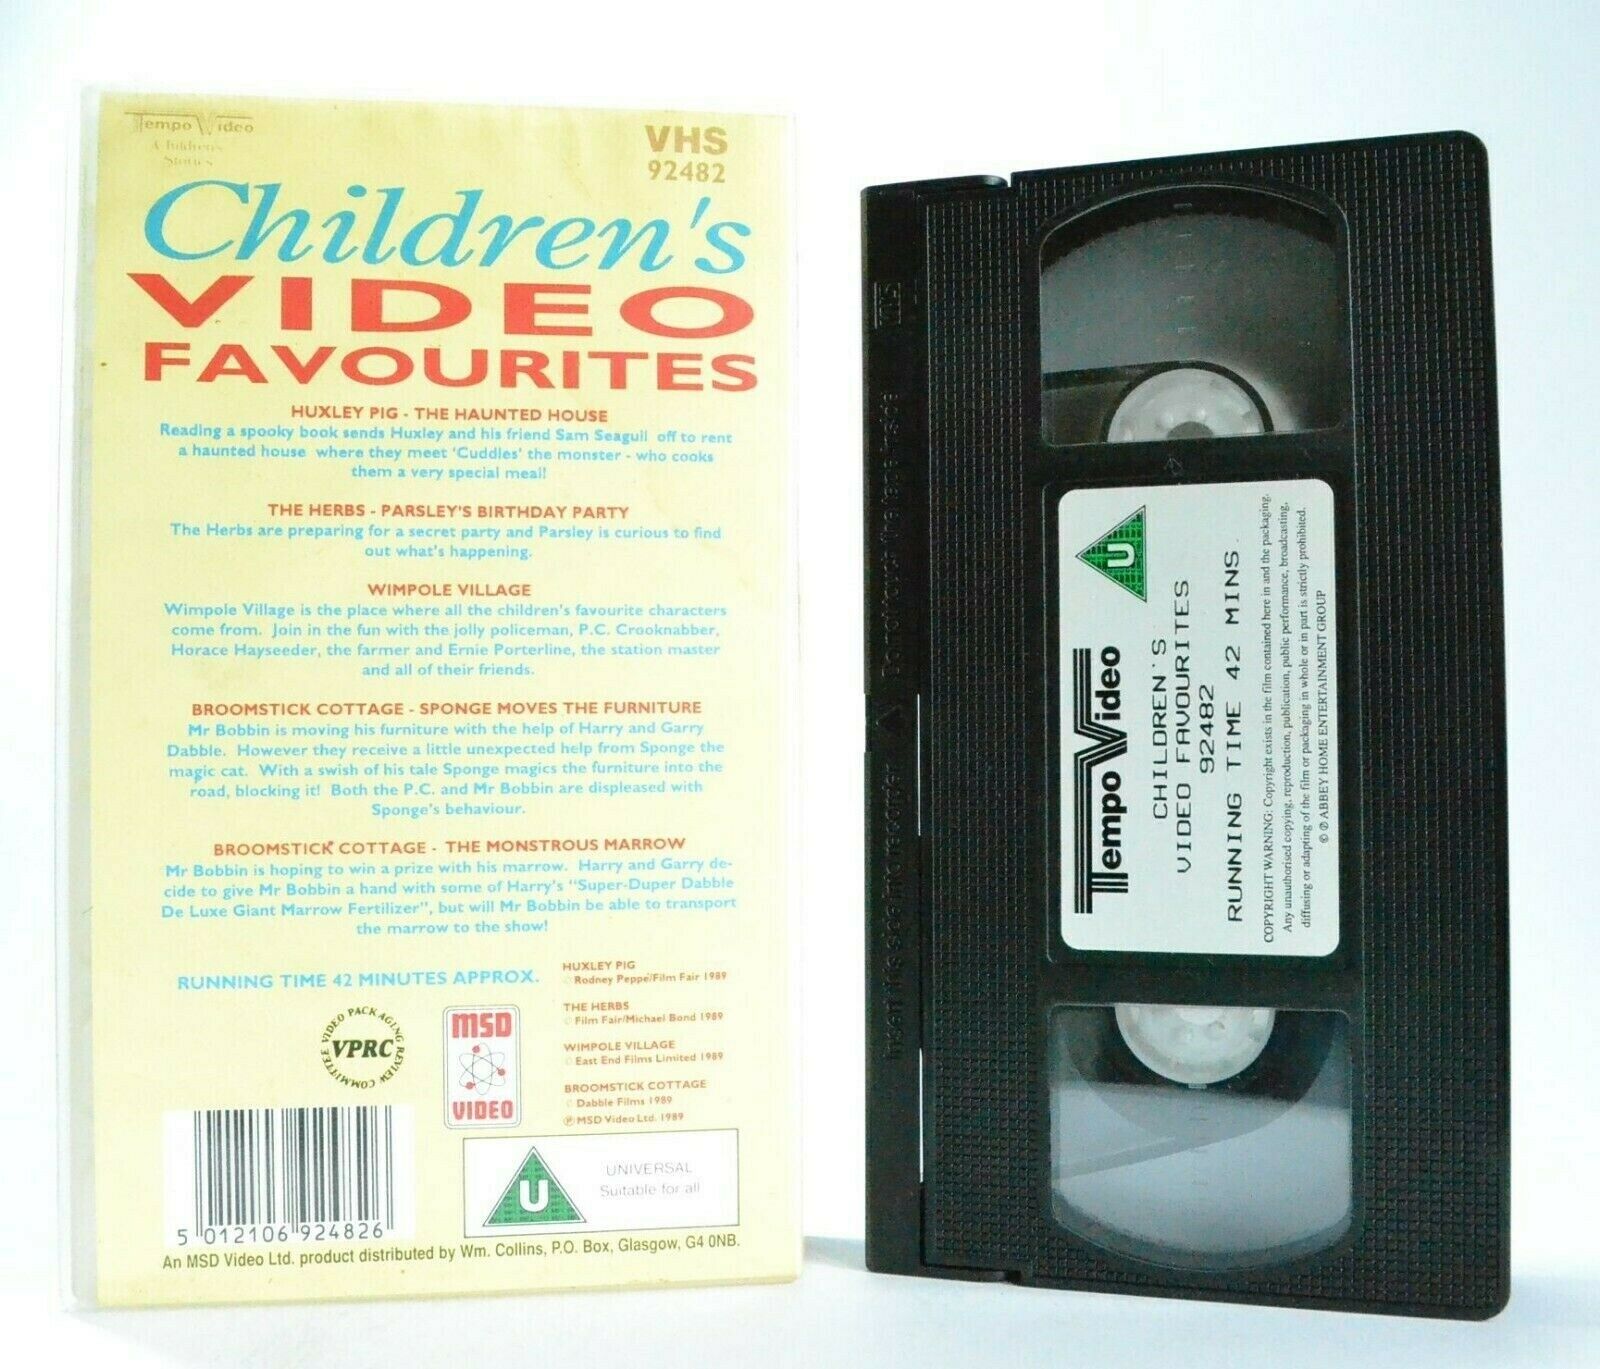 Children's Video Favourites: Huxley, Wimpole Village, Broomstick Cottage - VHS-